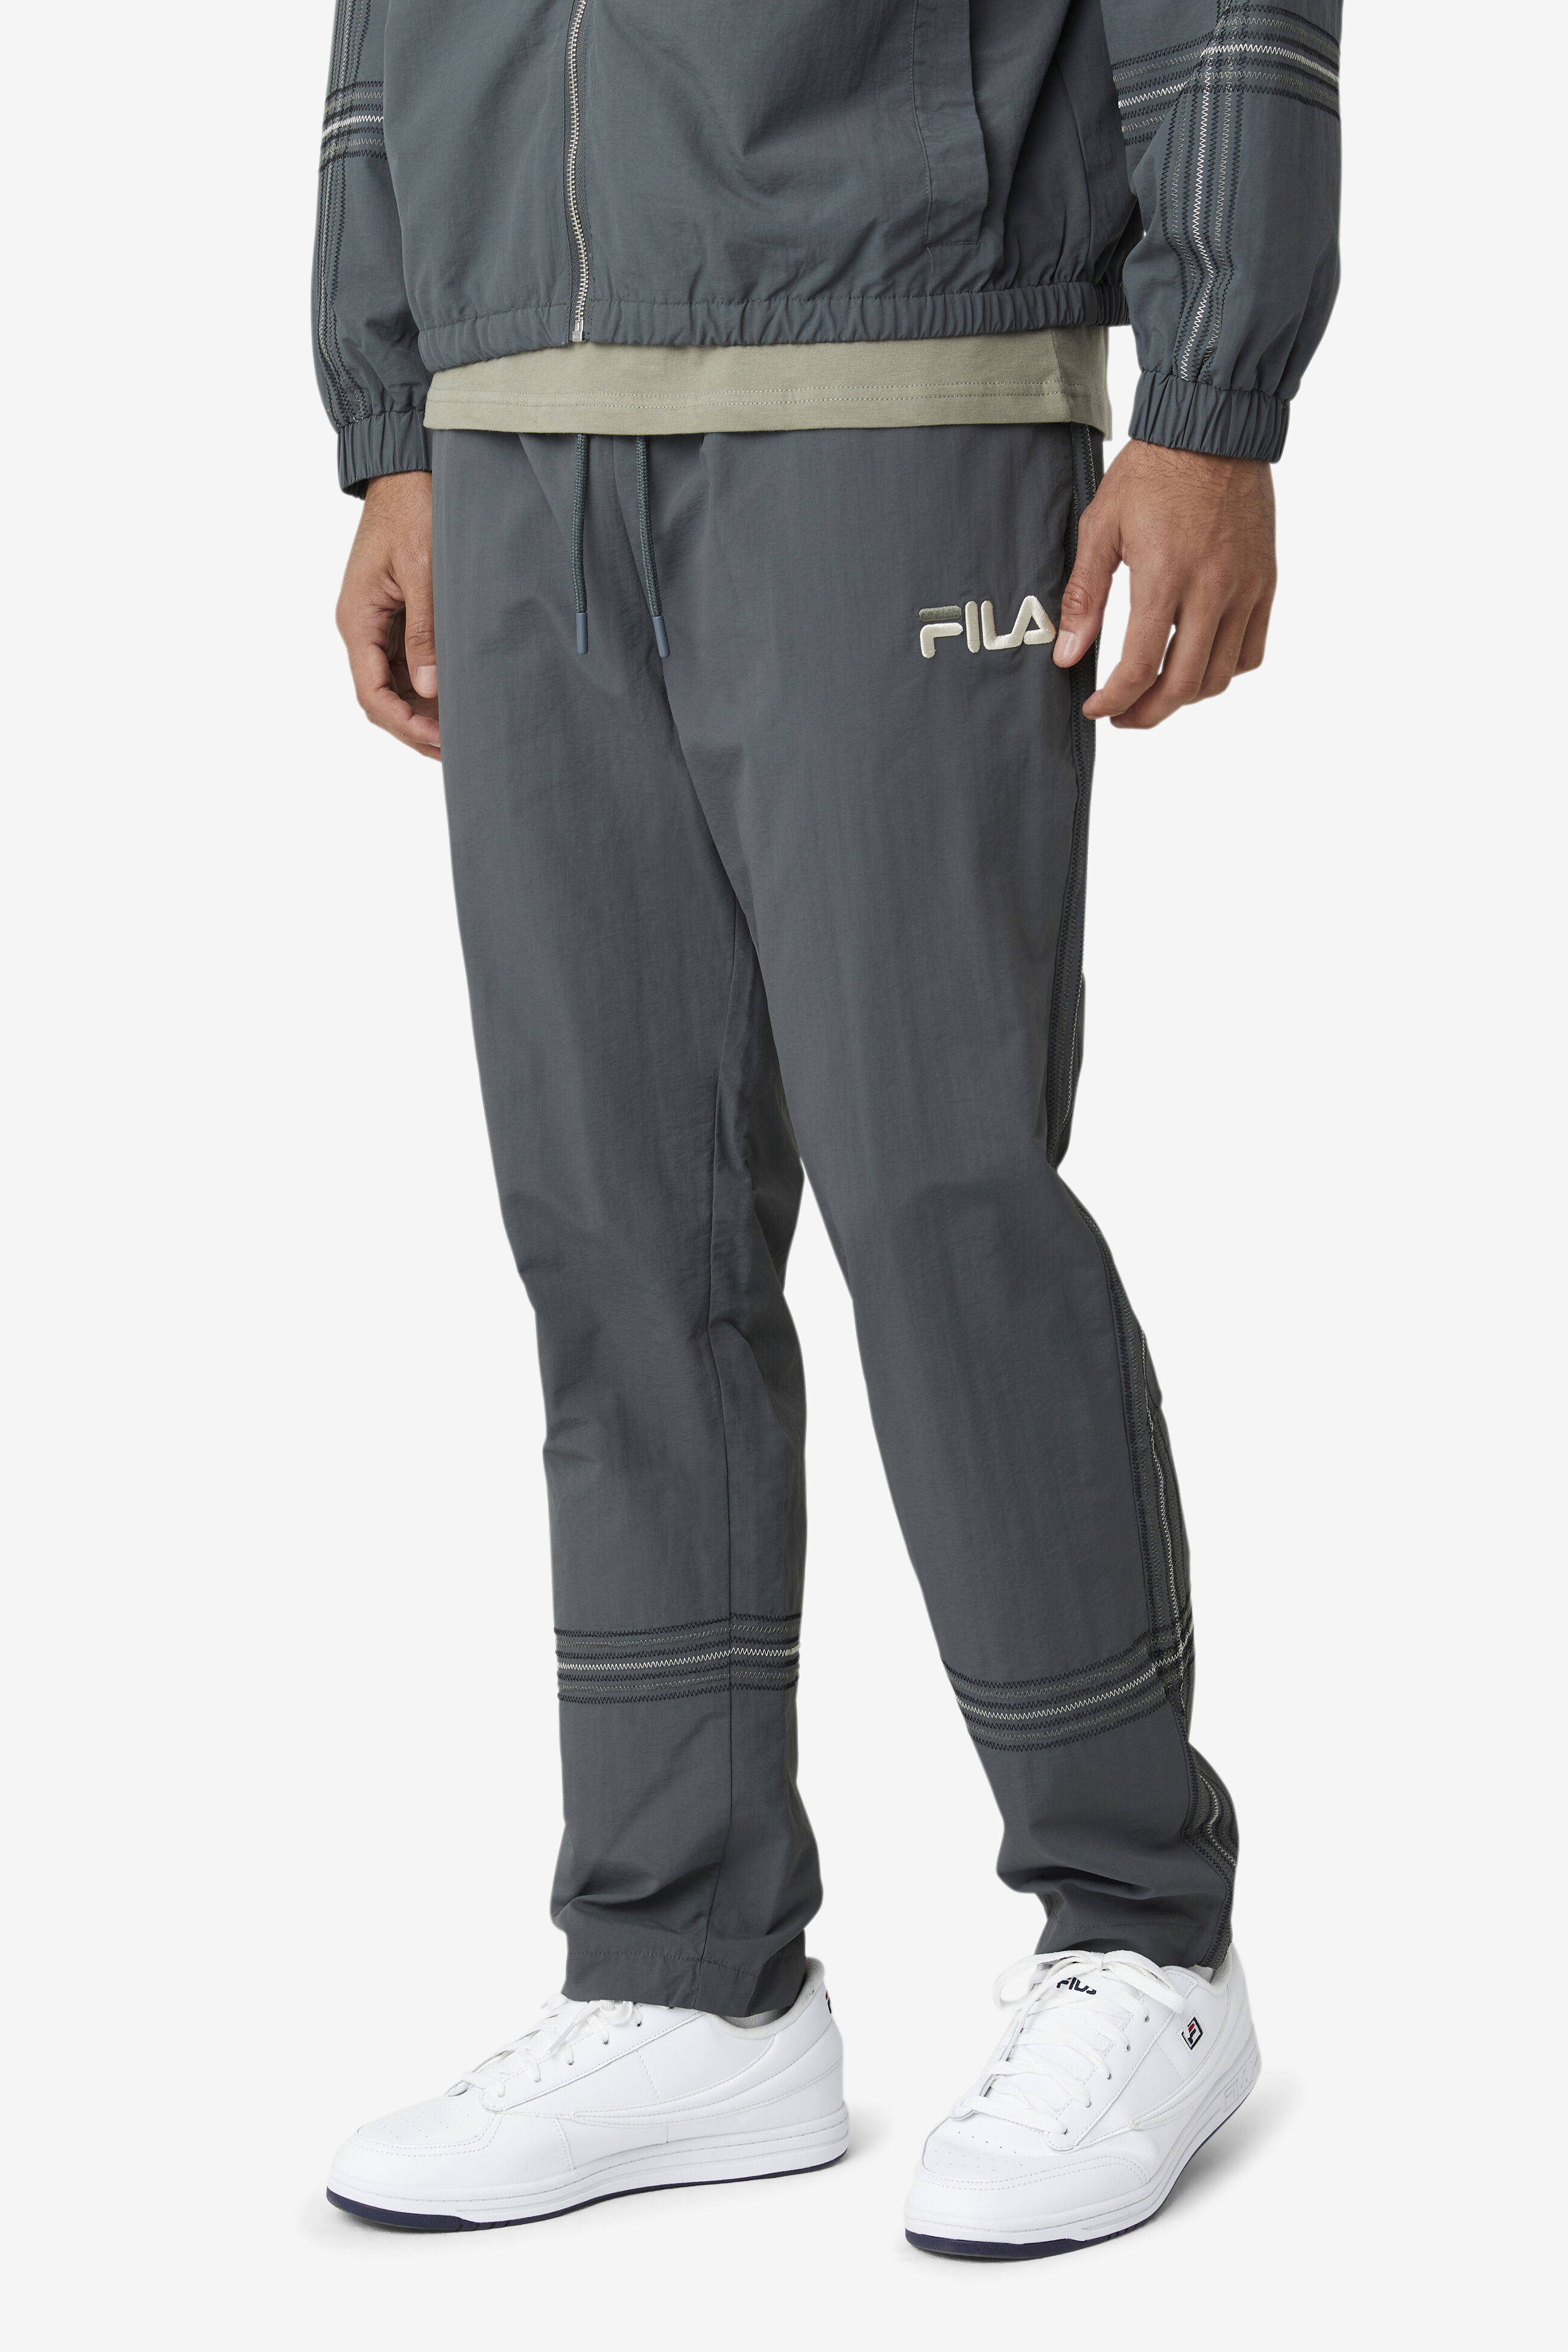 NEW Fila Men's XL Amazon Cargo Pants Black Green Canvas Streetwear NWT |  eBay